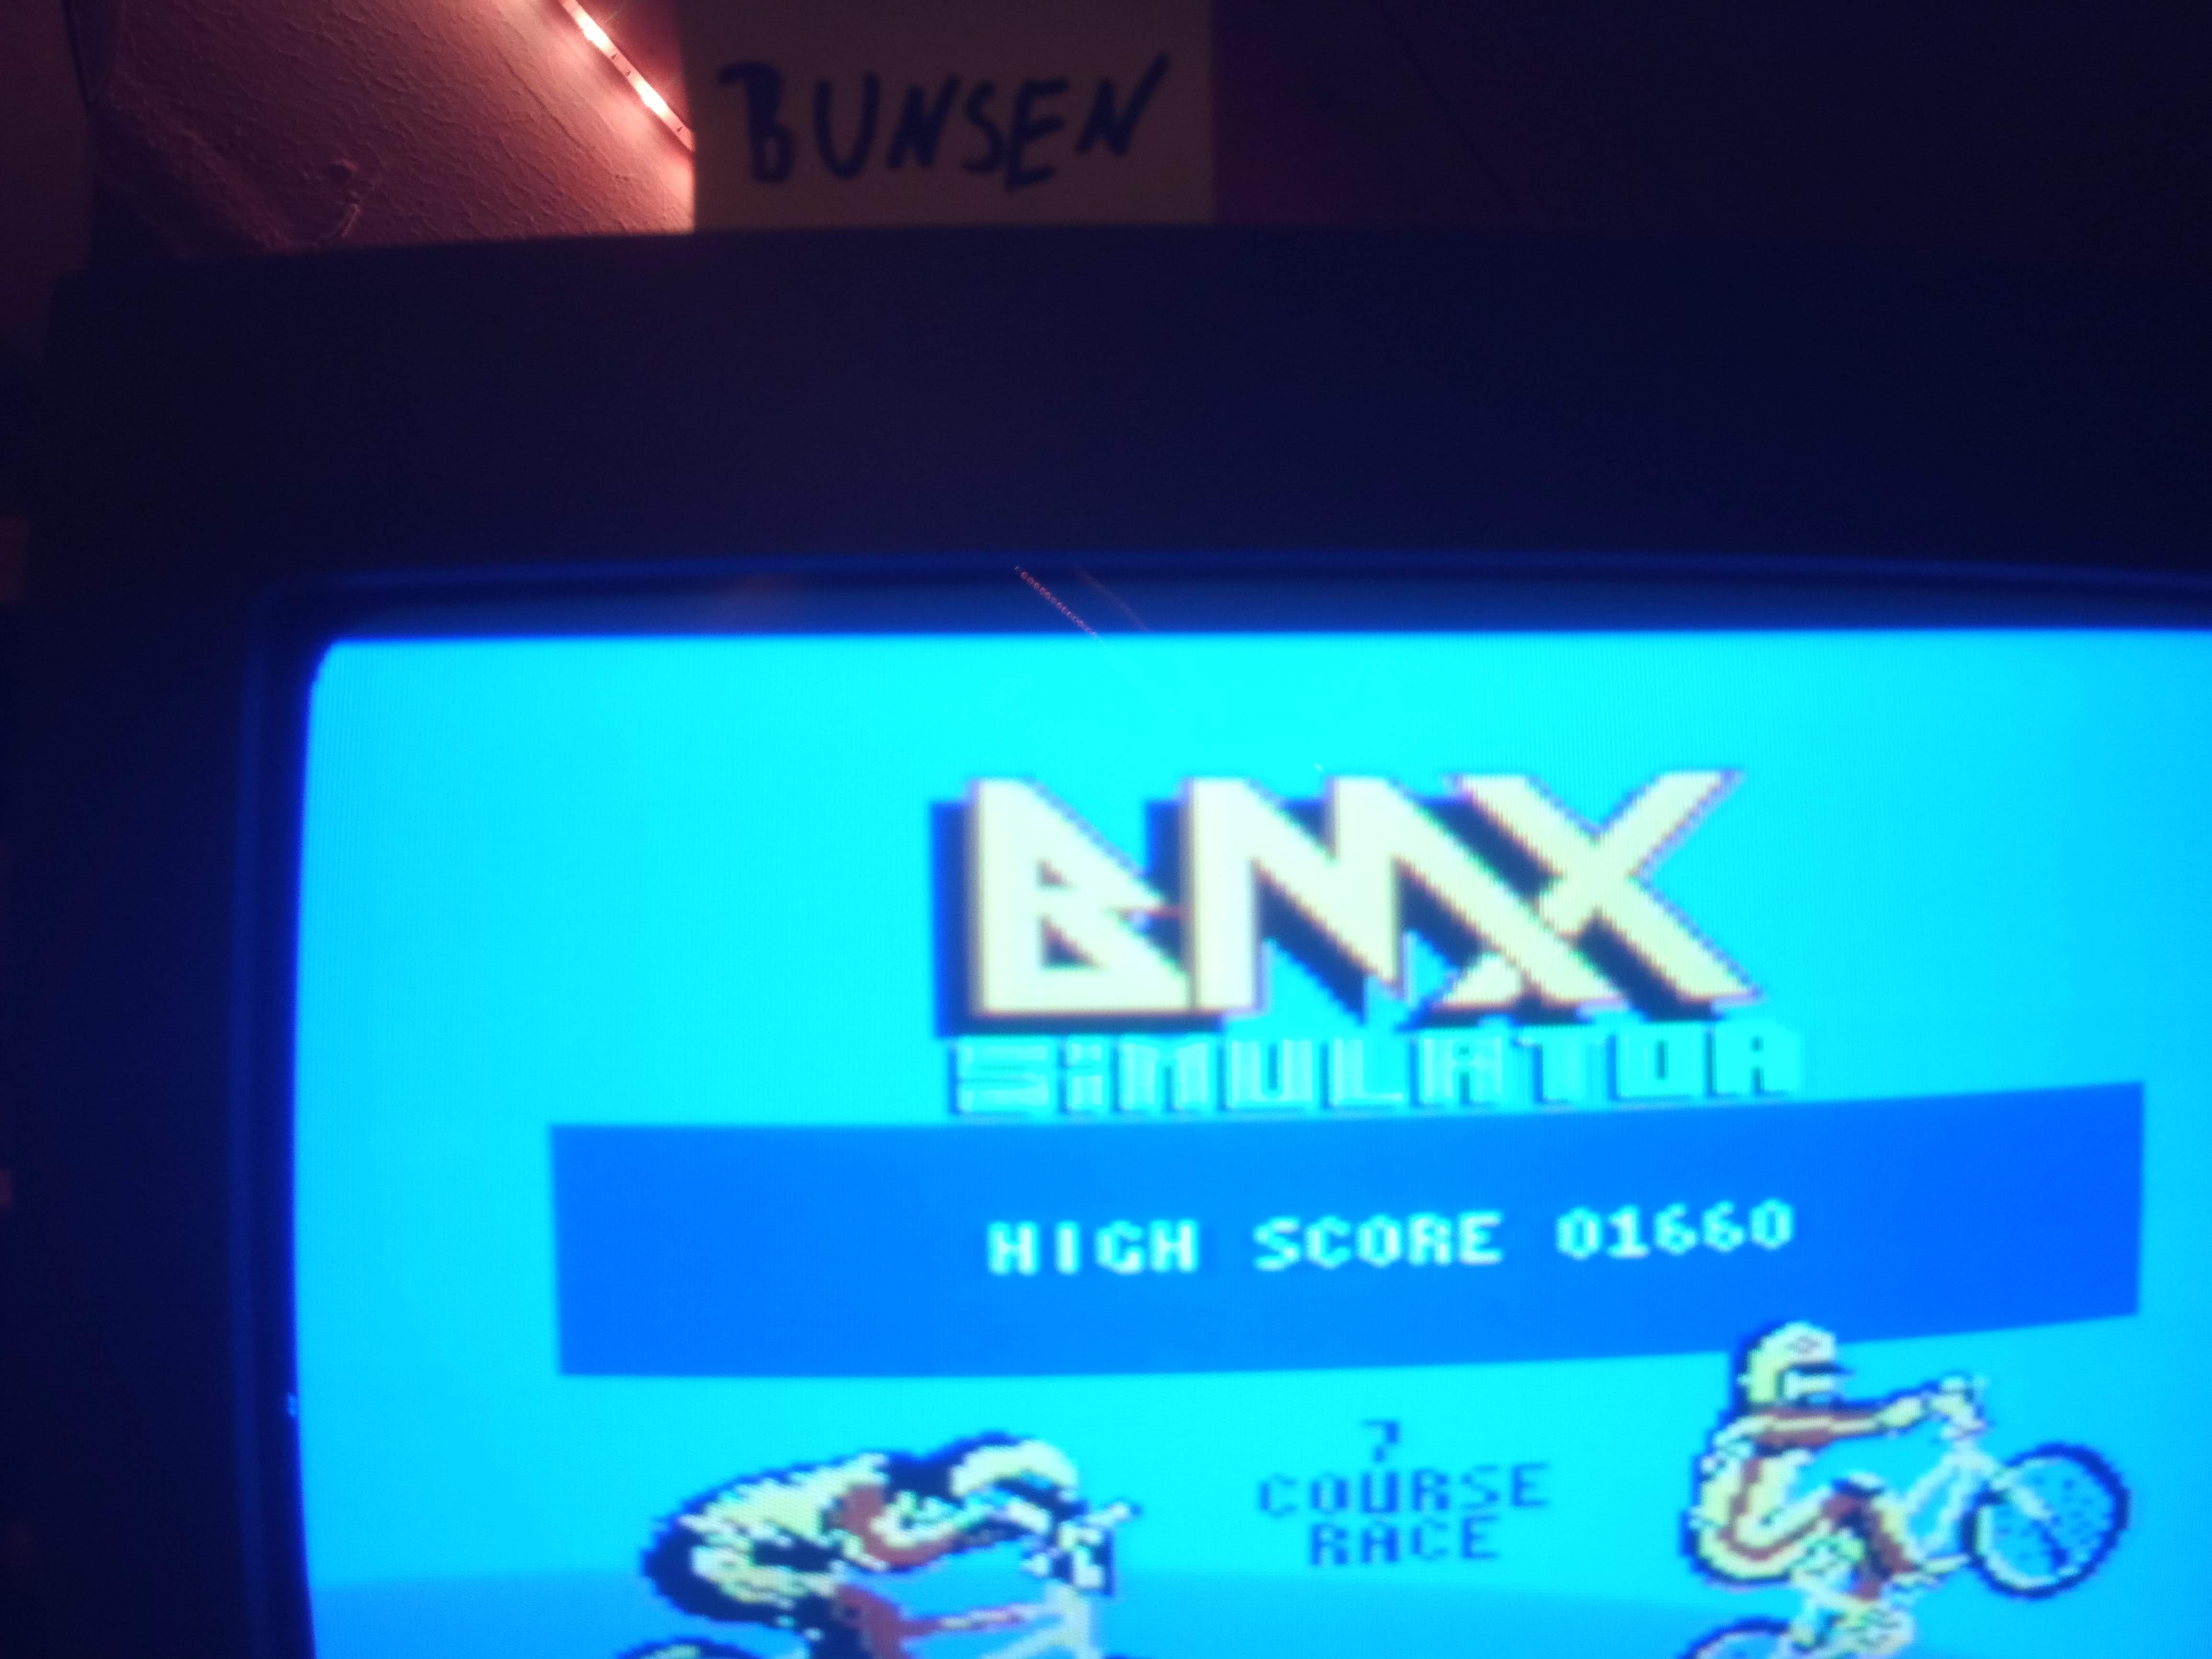 BMX Simulator 1,660 points